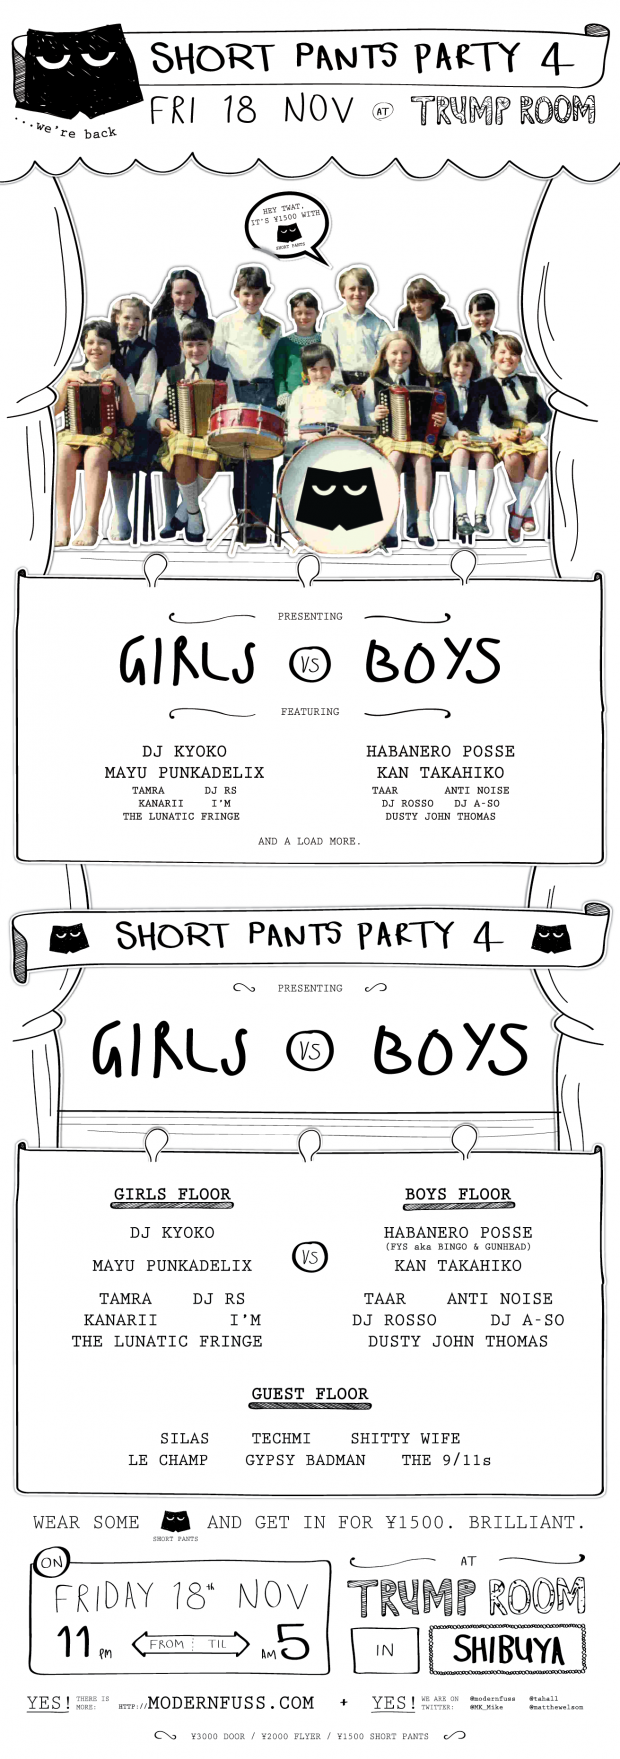 Short Pants Party - Girls Vs Boys Main Image